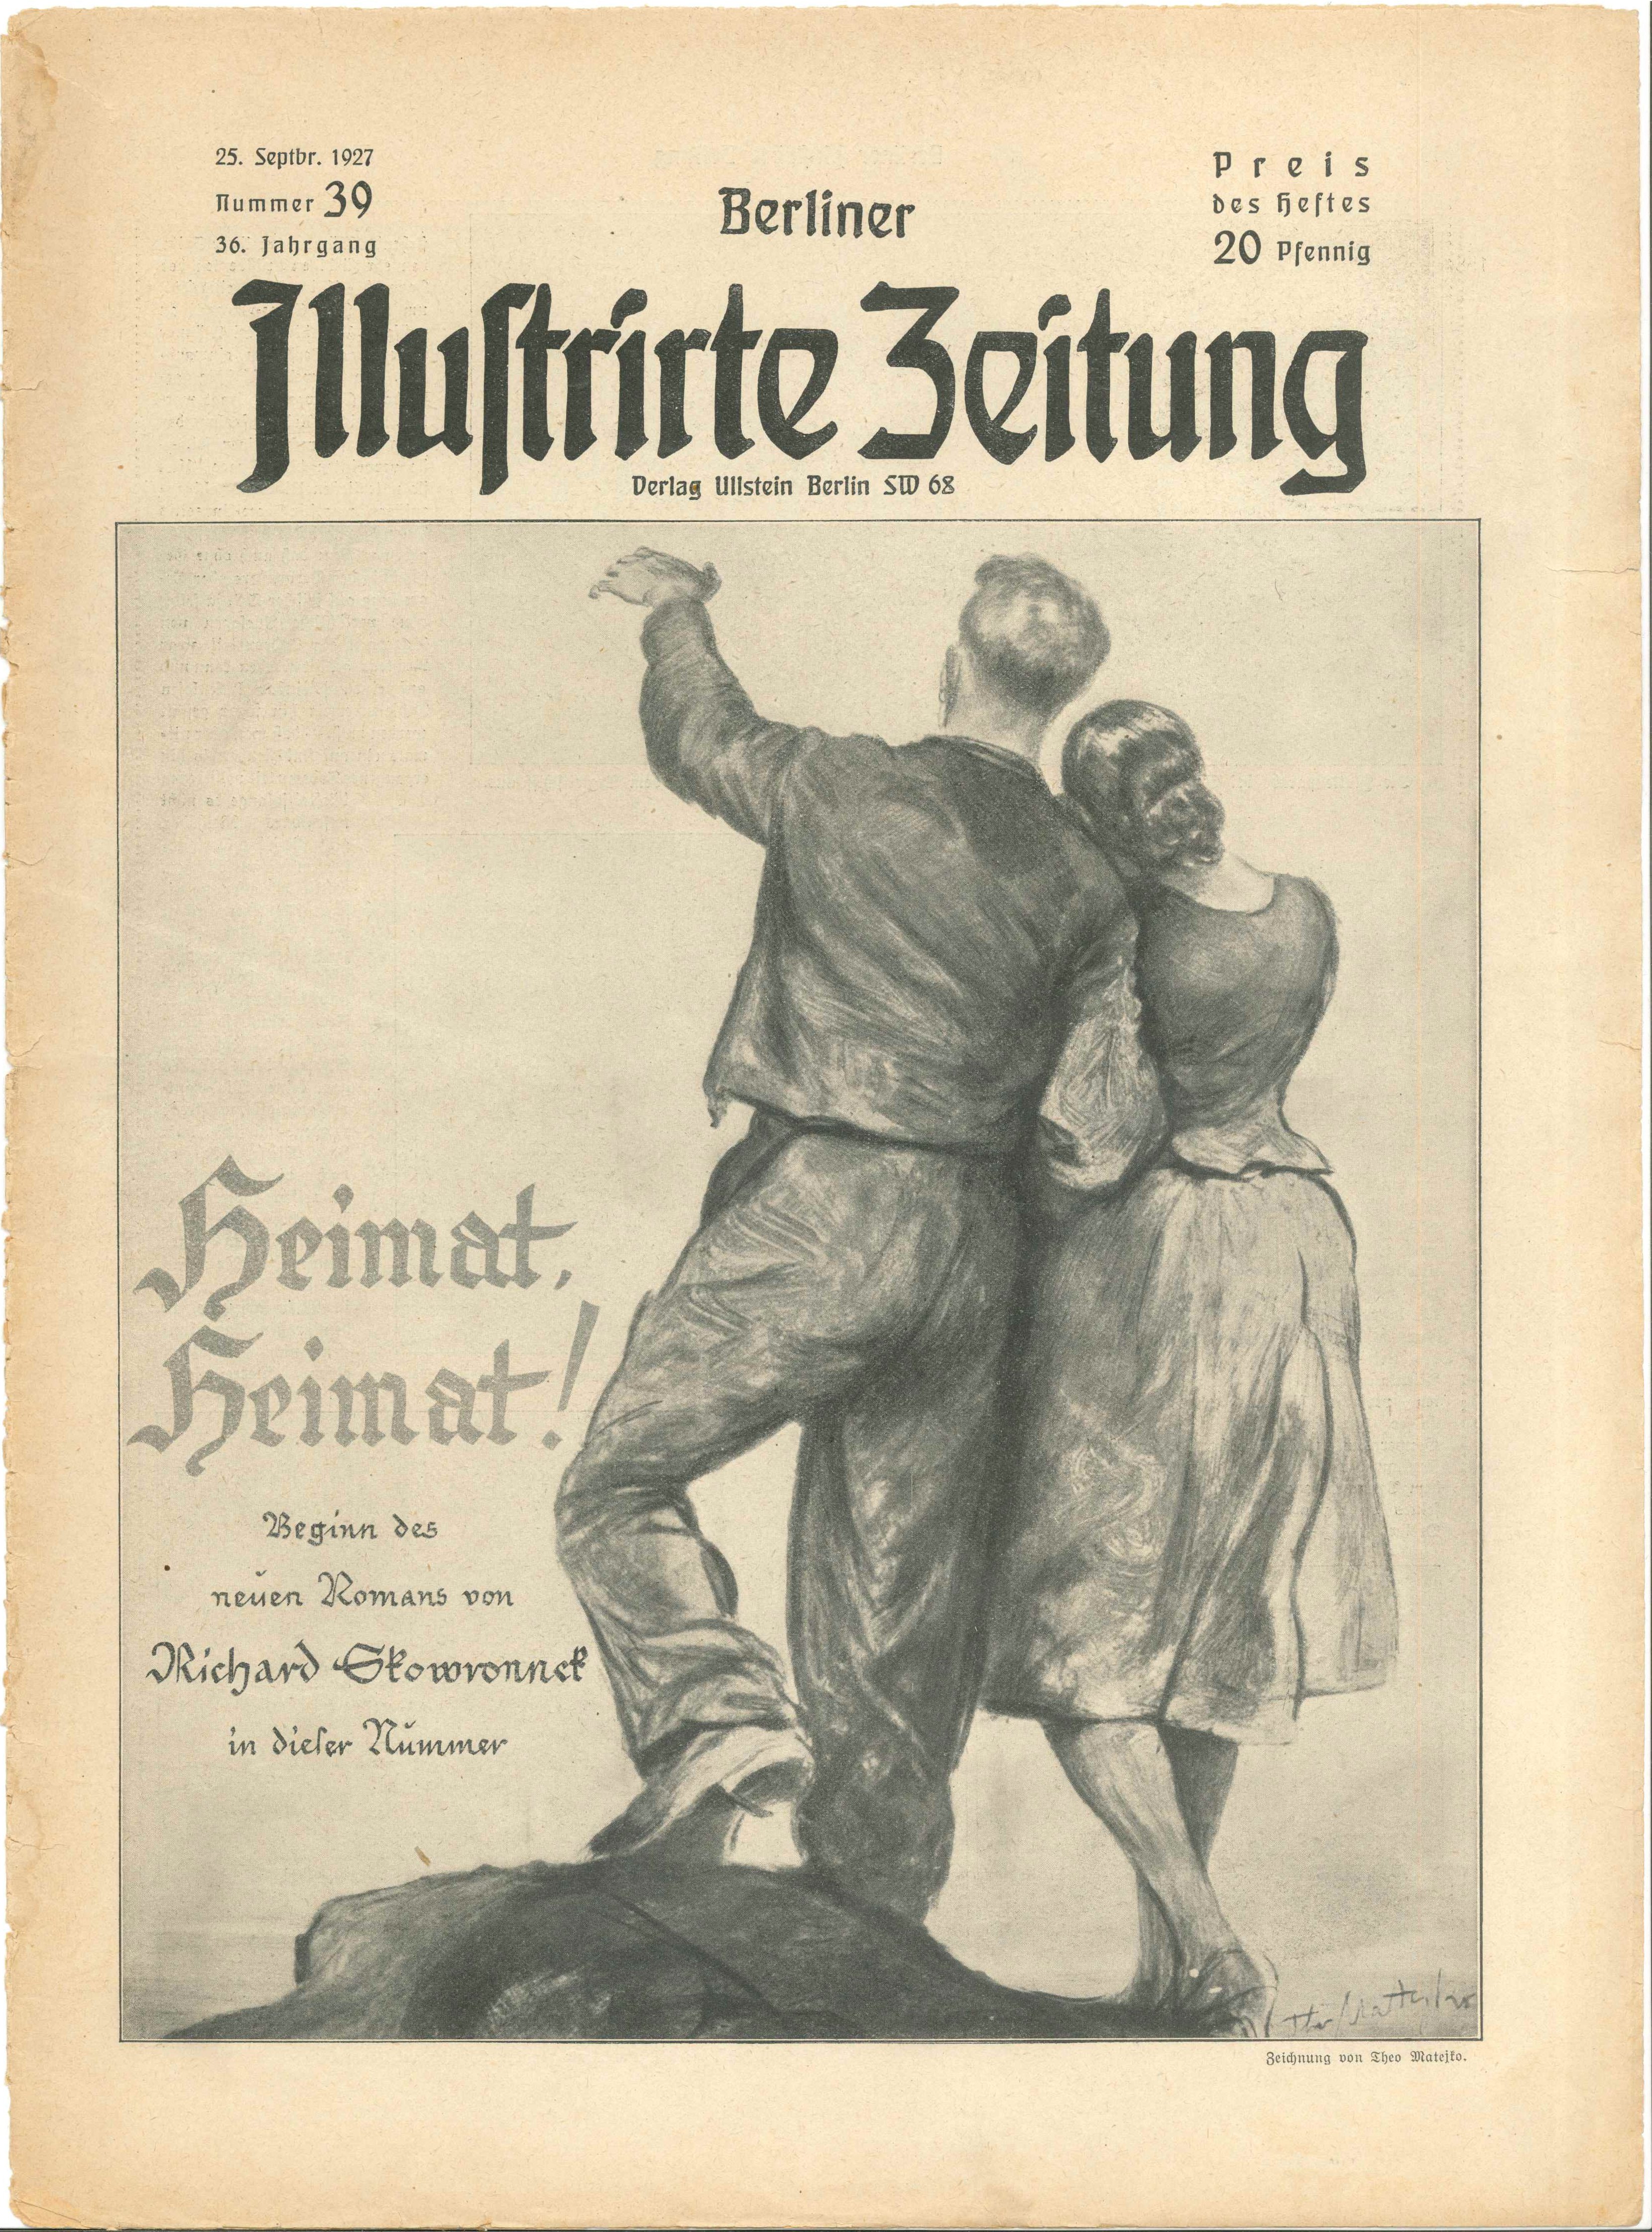 BIZ, Nr. 39, 1927, Titelseite (Kurt Tucholsky Literaturmuseum CC BY-NC-SA)